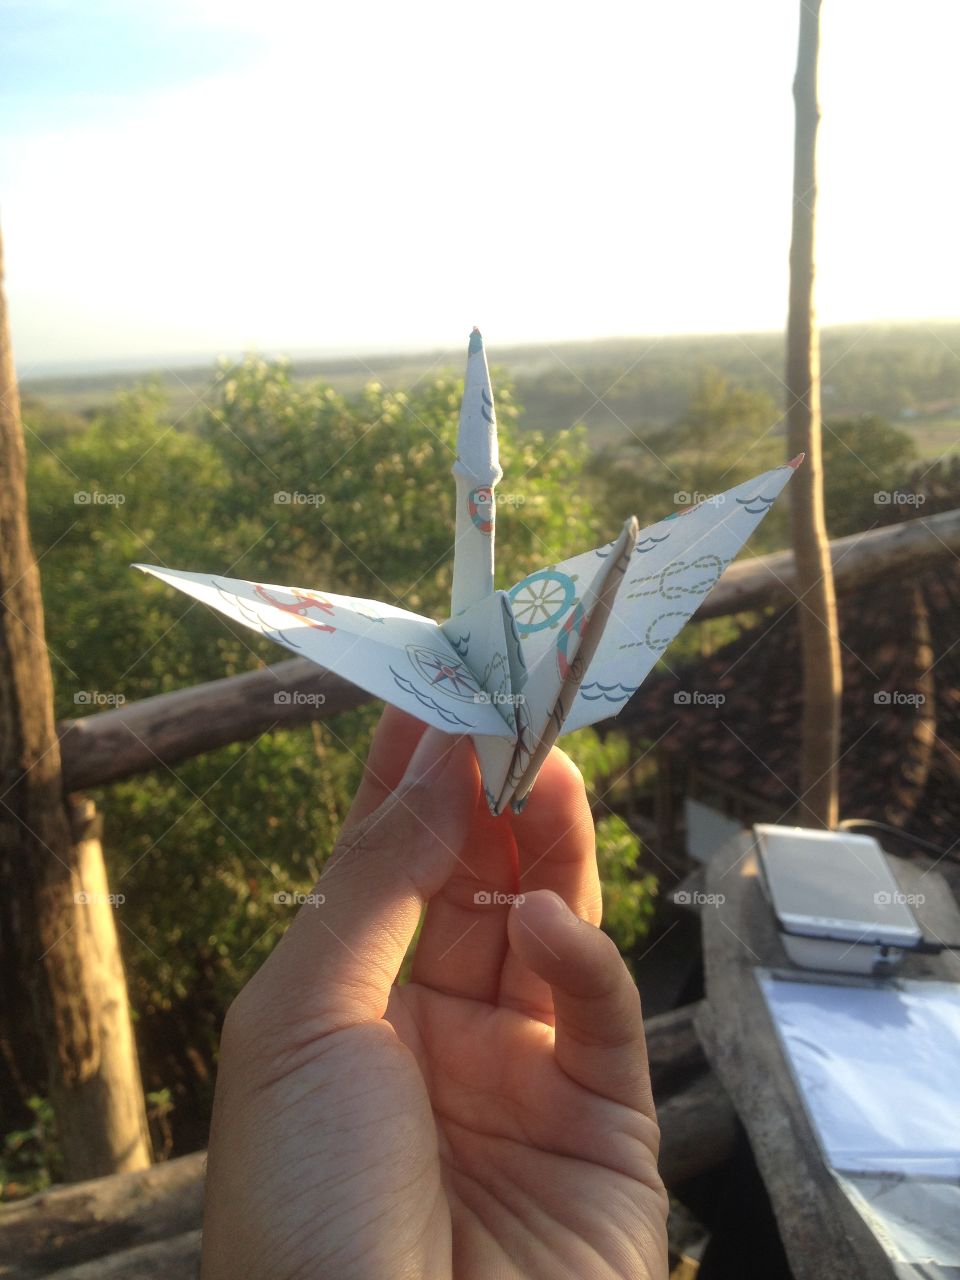 Origami
Bird
